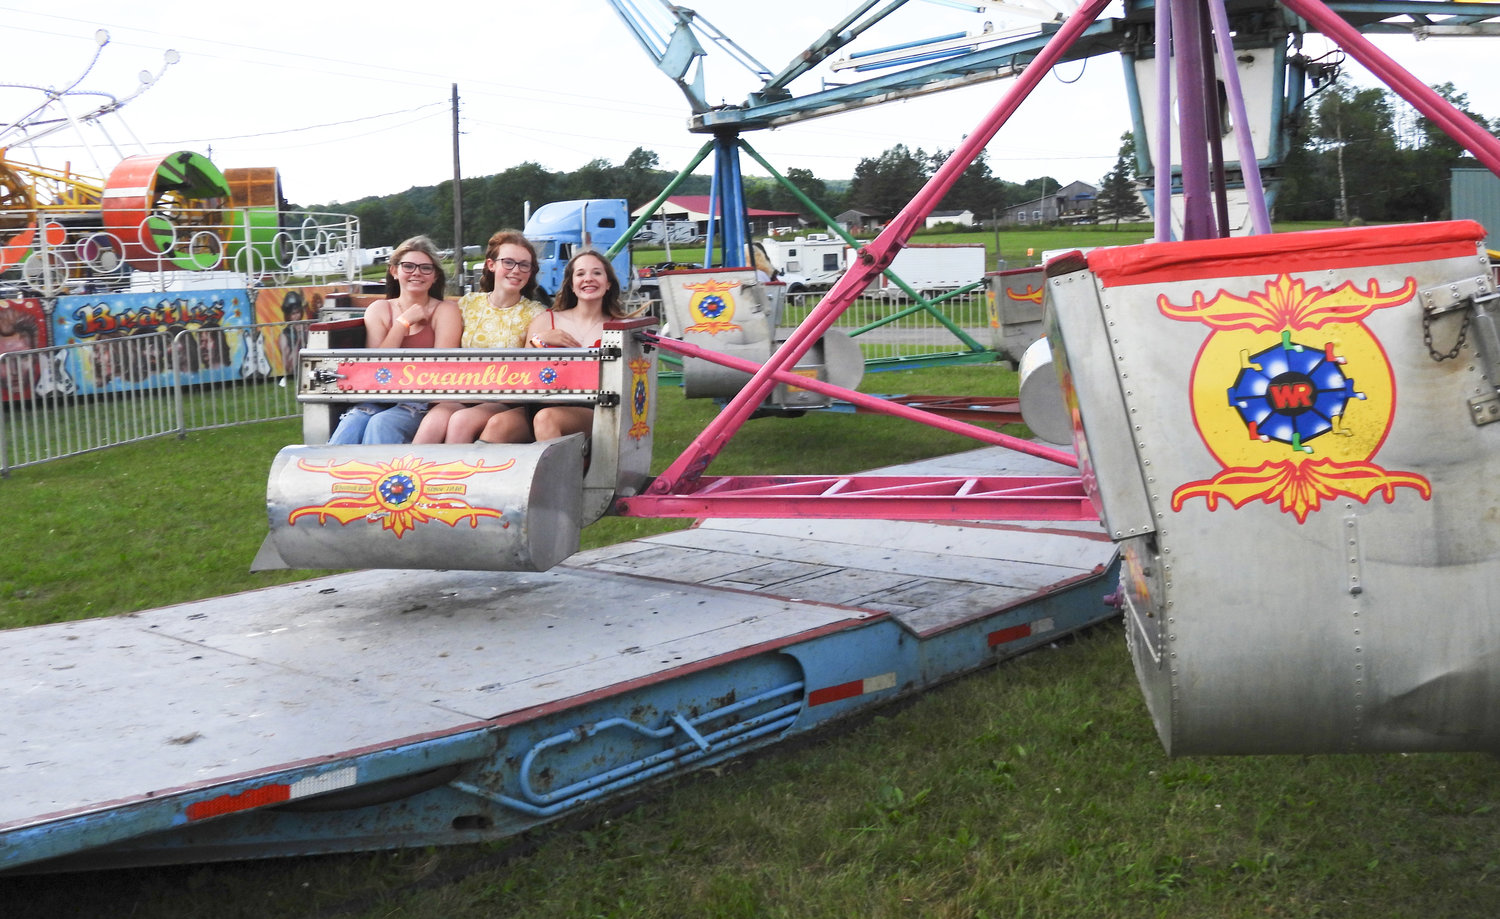 The Madison County Fair runs until July 10.